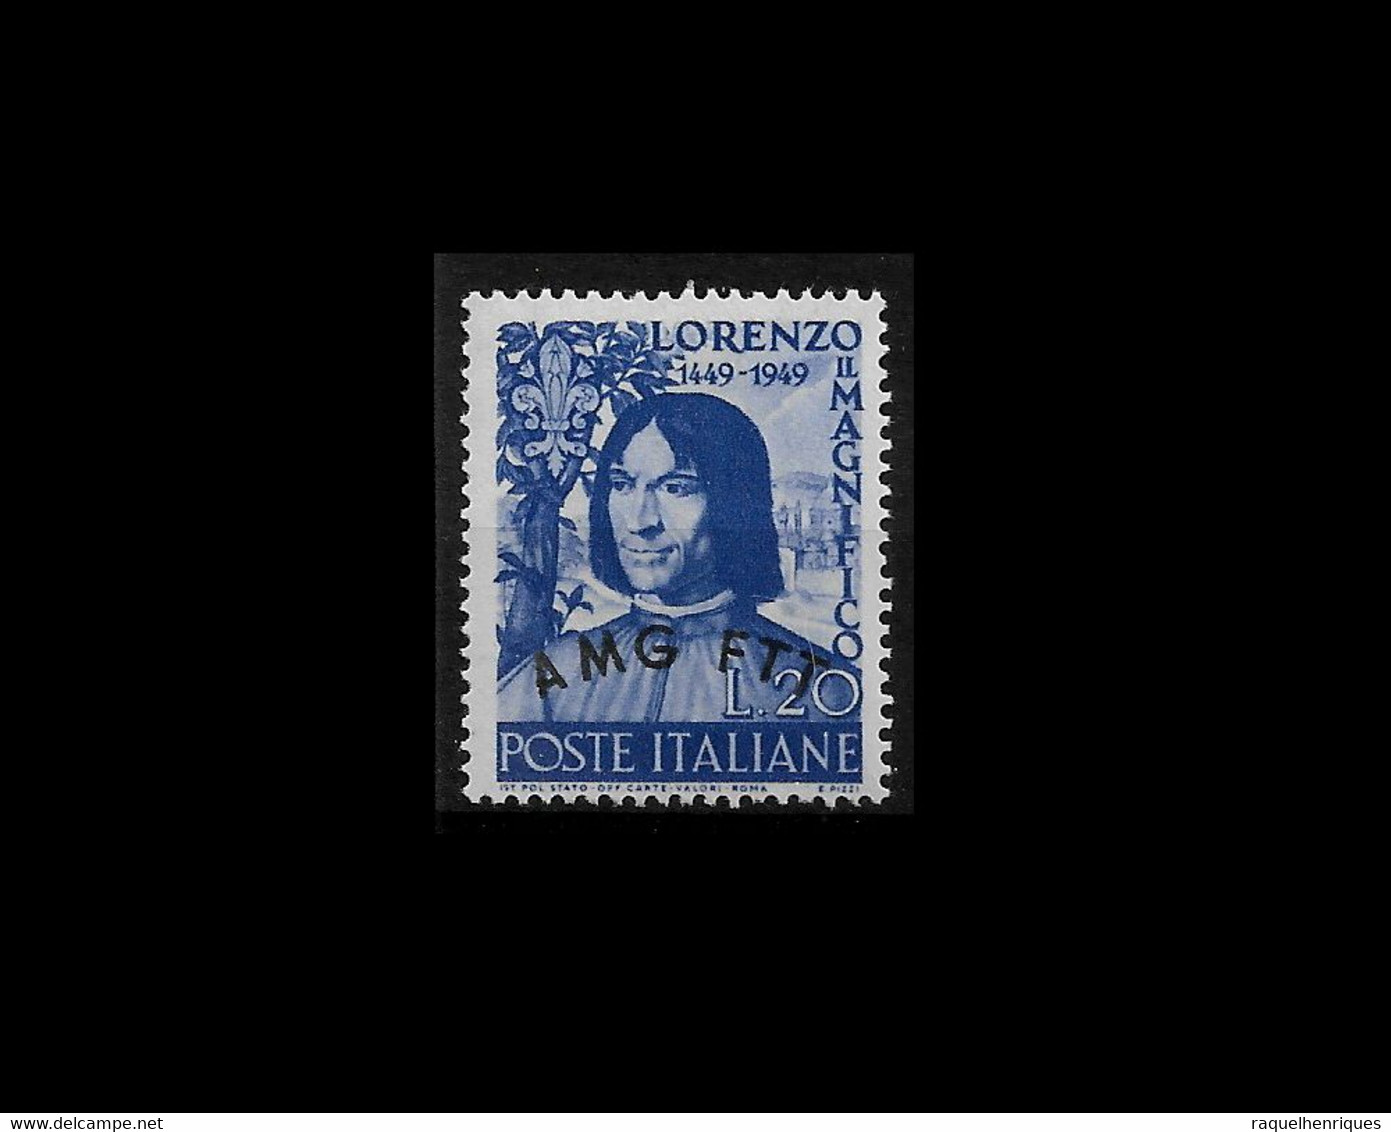 ITALY STAMP - TRIESTE ZONE A - 1949 The 500th An.Birth Of Lorenzo Medici - AMG FTT MH (BA5#58) - Aegean (Autonomous Adm.)